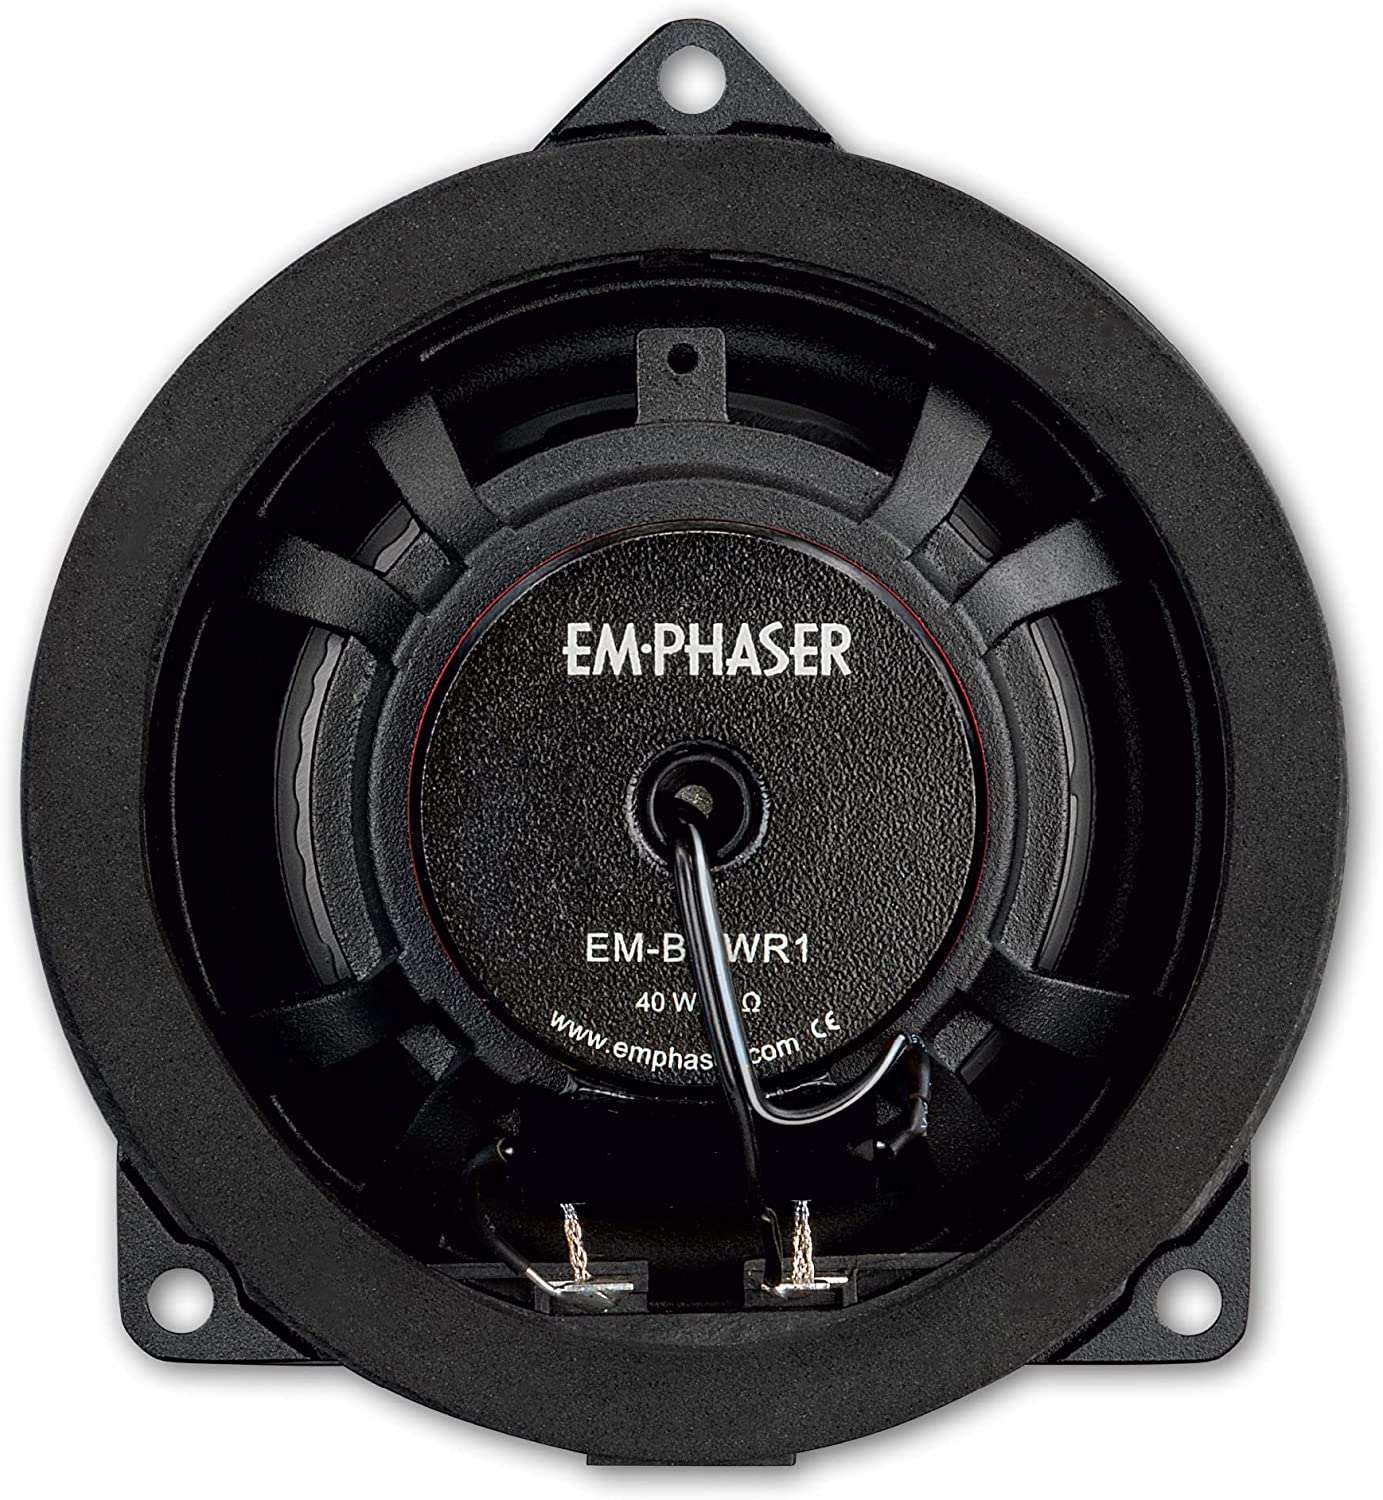 EMPHASER EM-BMWR1 10 cm Koaxial Lautsprecher System für BMW E6x,E7x,E8x,E9x,F0x,F2x,F3x,F4x,F5x,F8x,G11,G12,G30,G31,G38,I und Mini F5x / F60 / R60 / R61